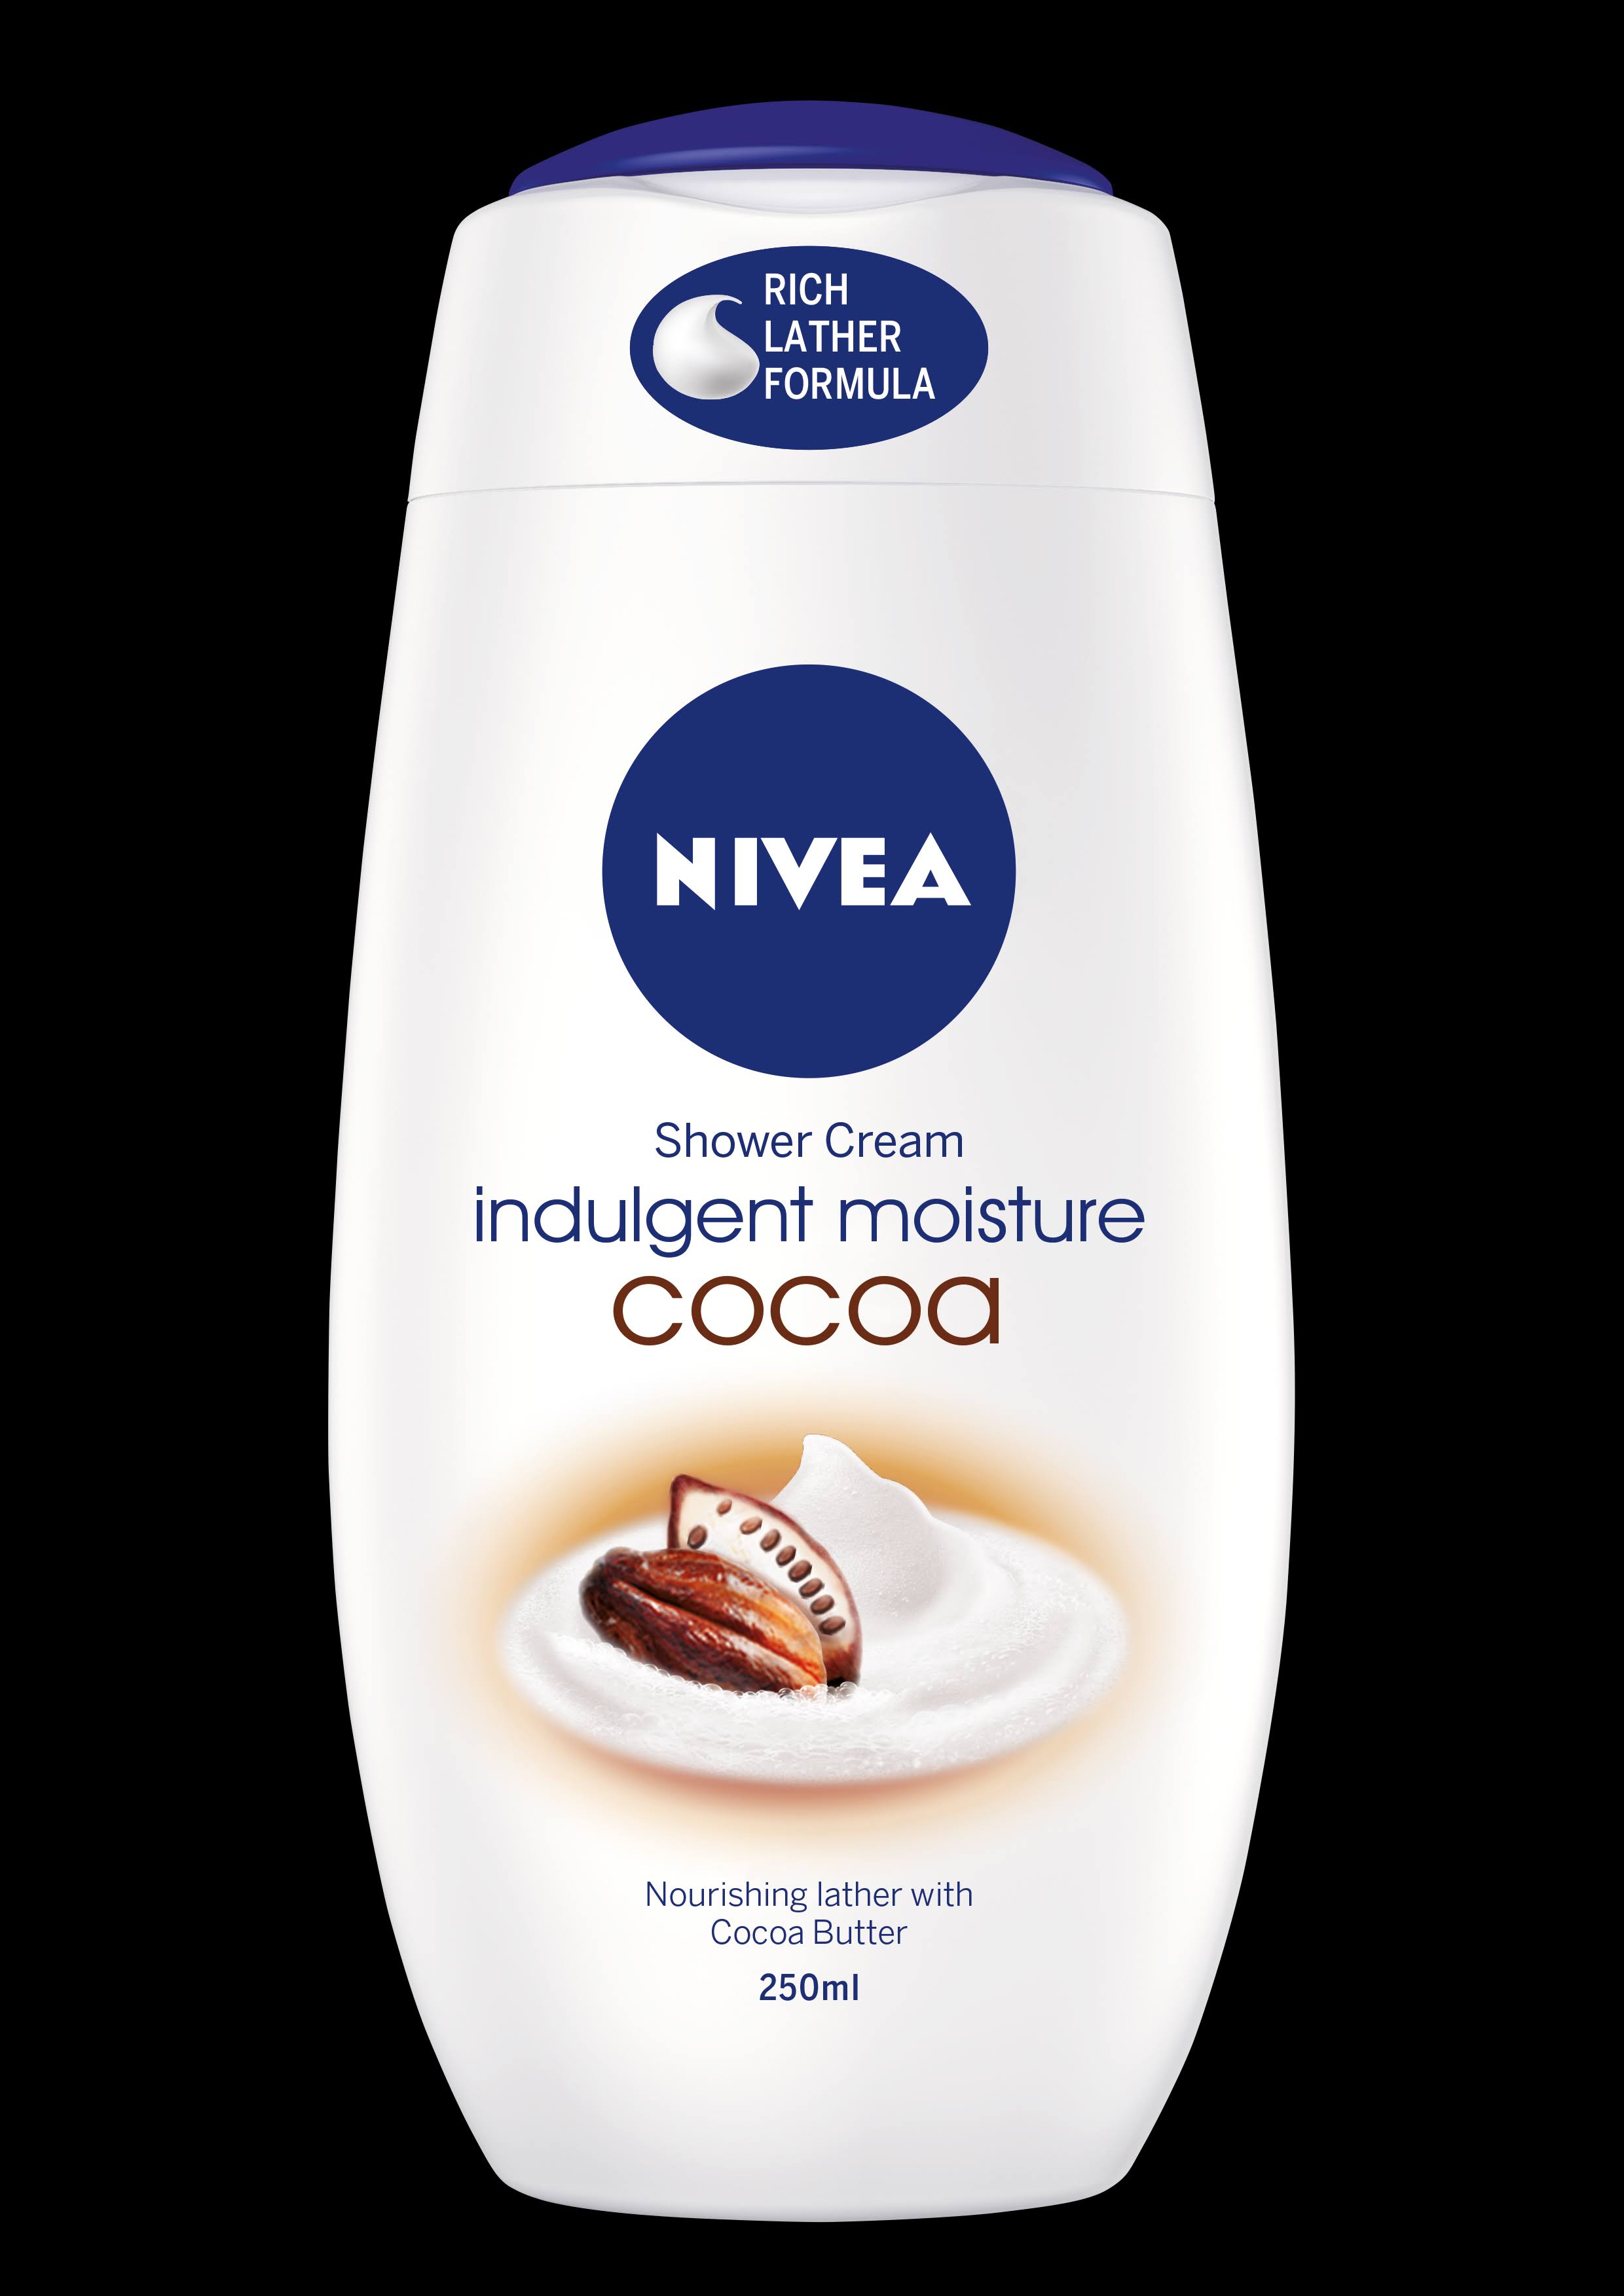 Nivea Indulging Moisture Caring Shower Cream - Cocoa, 250ml